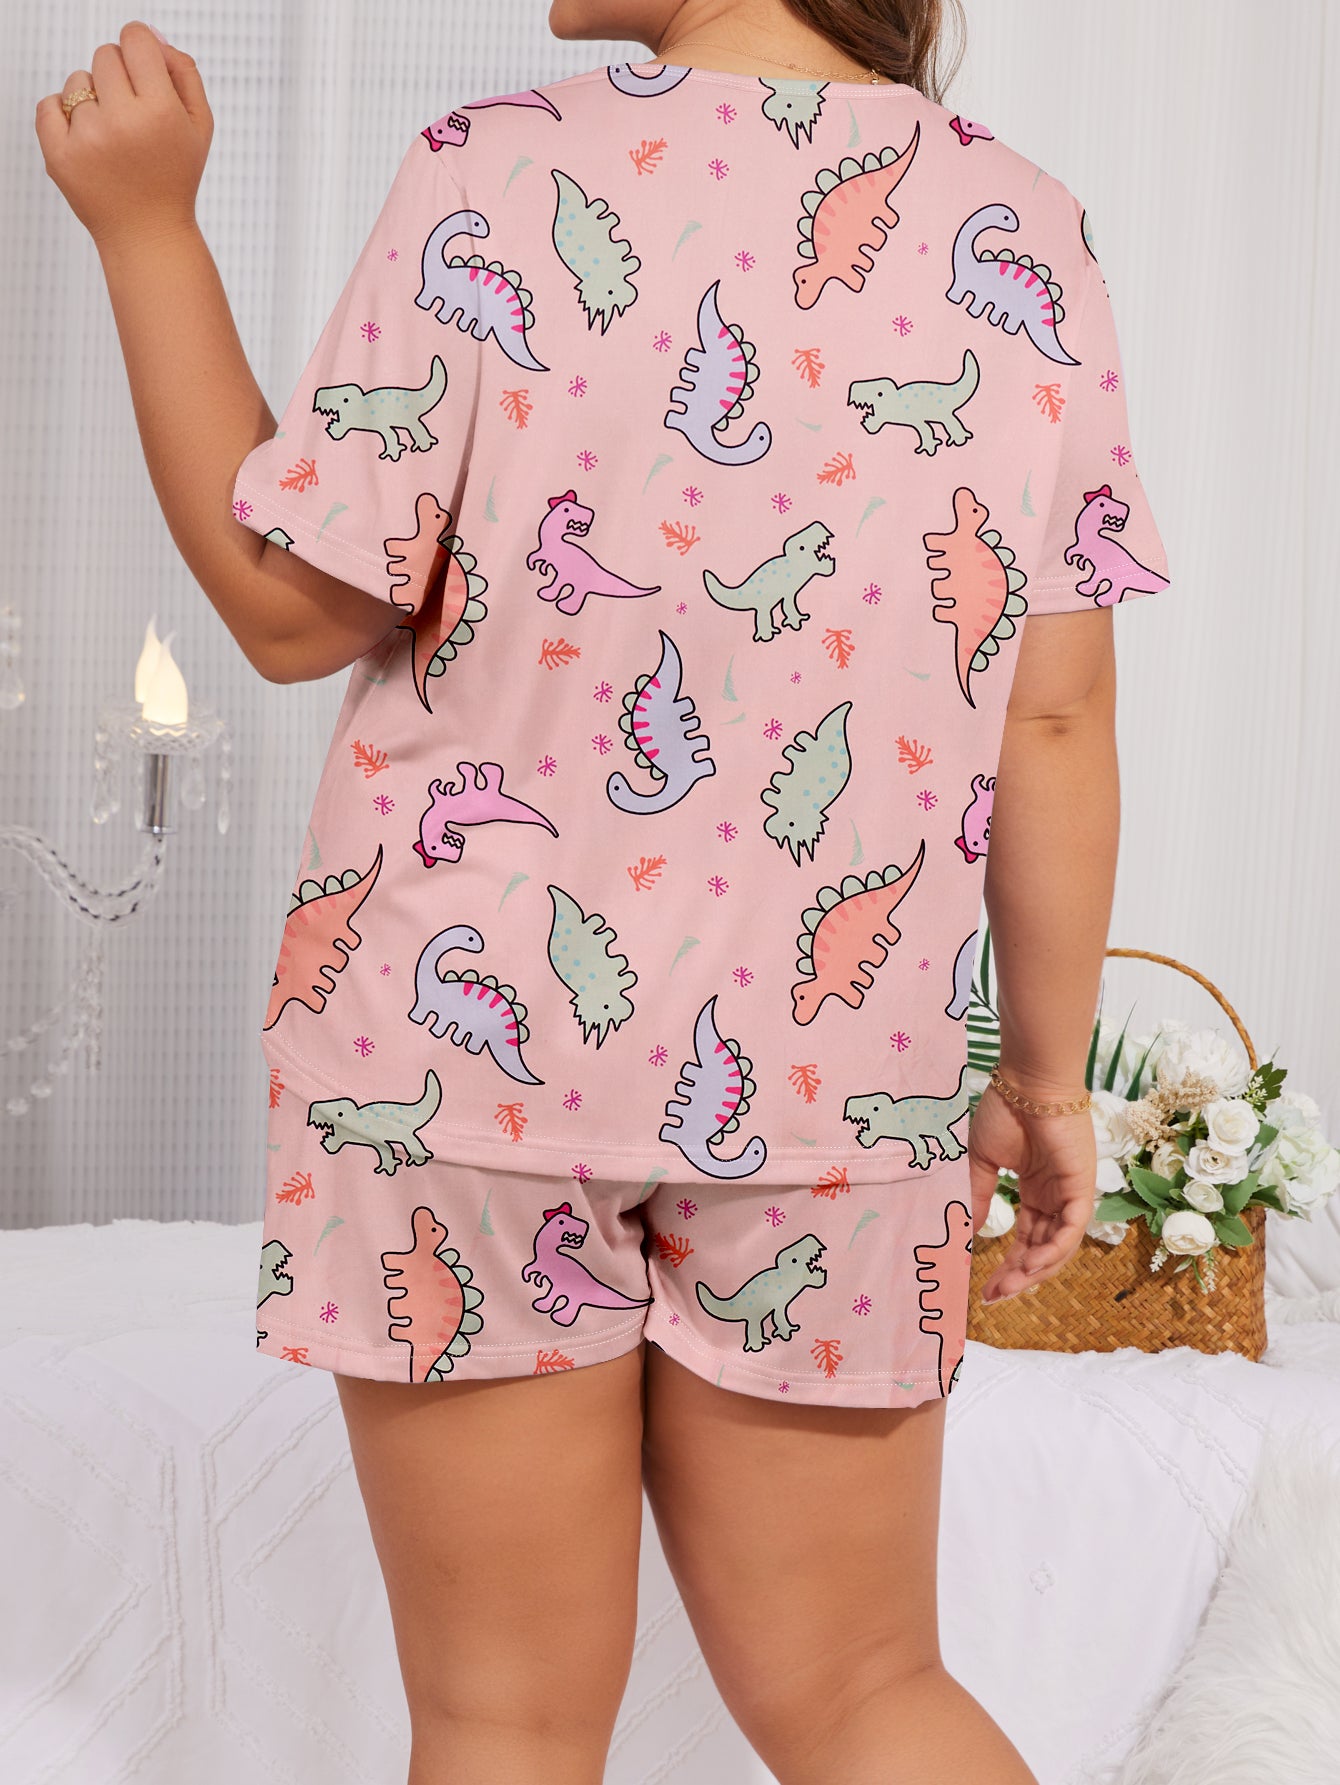 Women's Easter-themed Pajama Set: Plus Size Cartoon Dinosaur Print Short Sleeve Top & Shorts Lounge Set